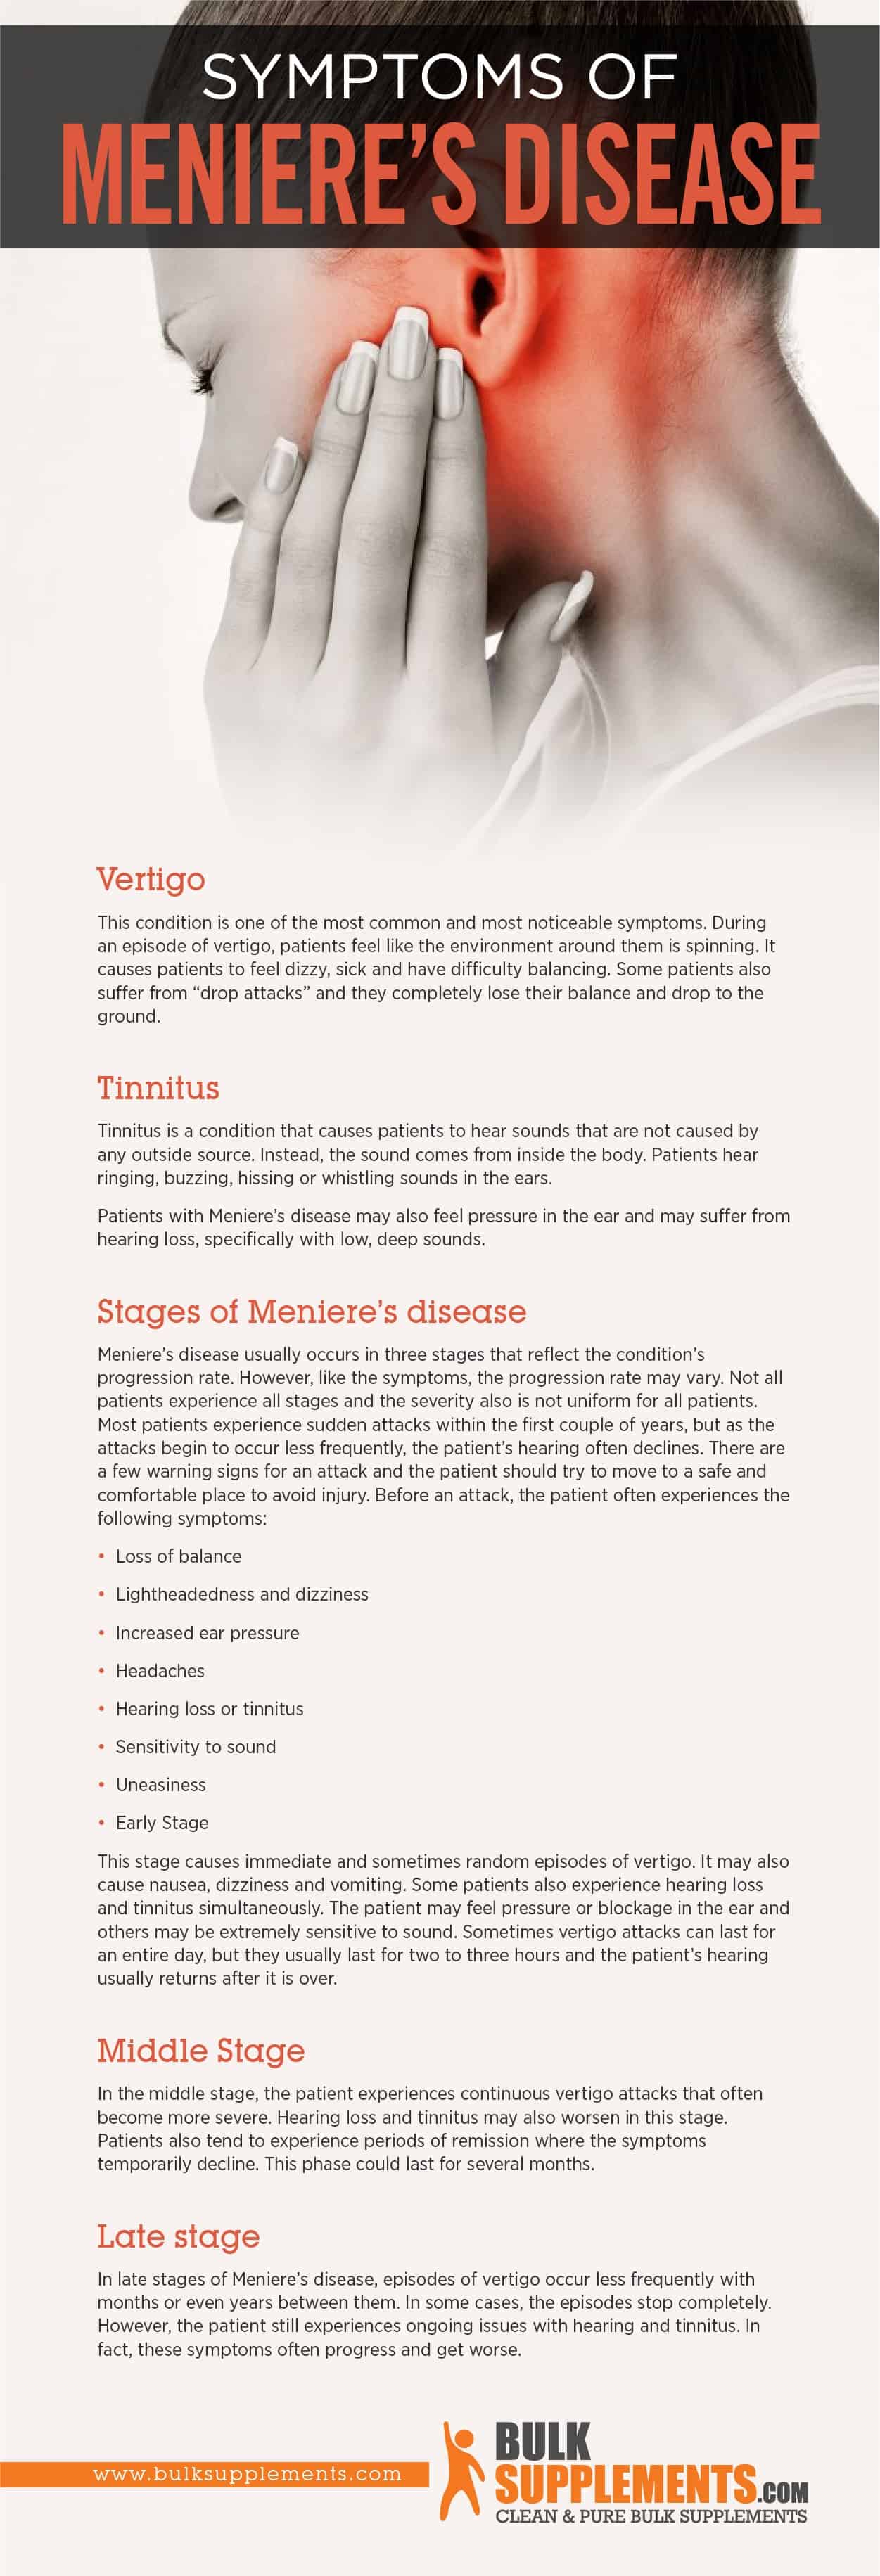 Symptoms of Meniere's Disease